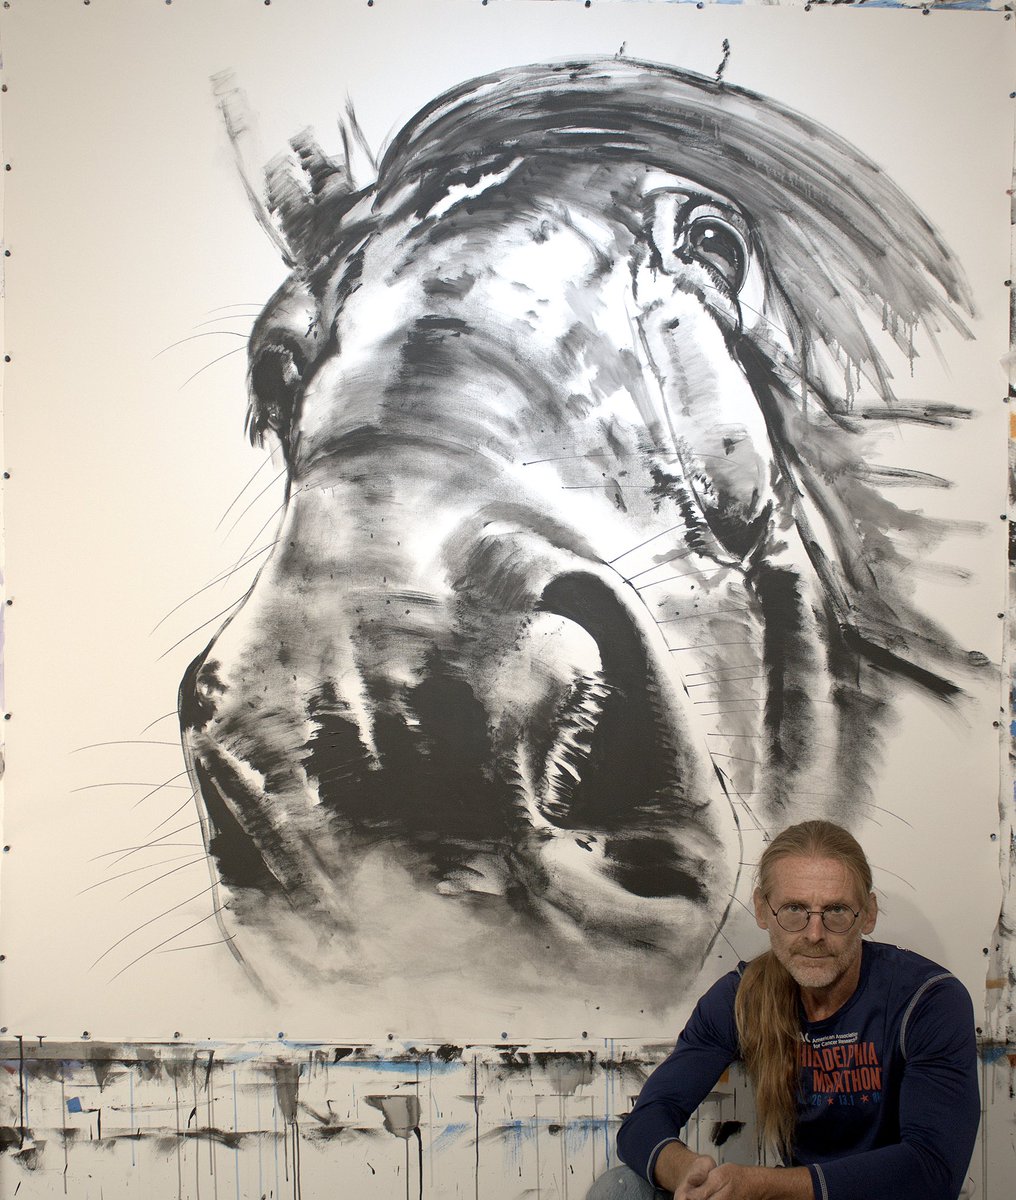 ”Lakota” 73 x 70 inch ink and acrylic on canvas.
Available on my website.
#ink #inked #inkedart #inkdrawing #drawing #drawings #painting #paintings #horses #equestrian #horseart #equineart #horse #equine #art #artist #artists #artwork #contemporaryart #animals #animalart